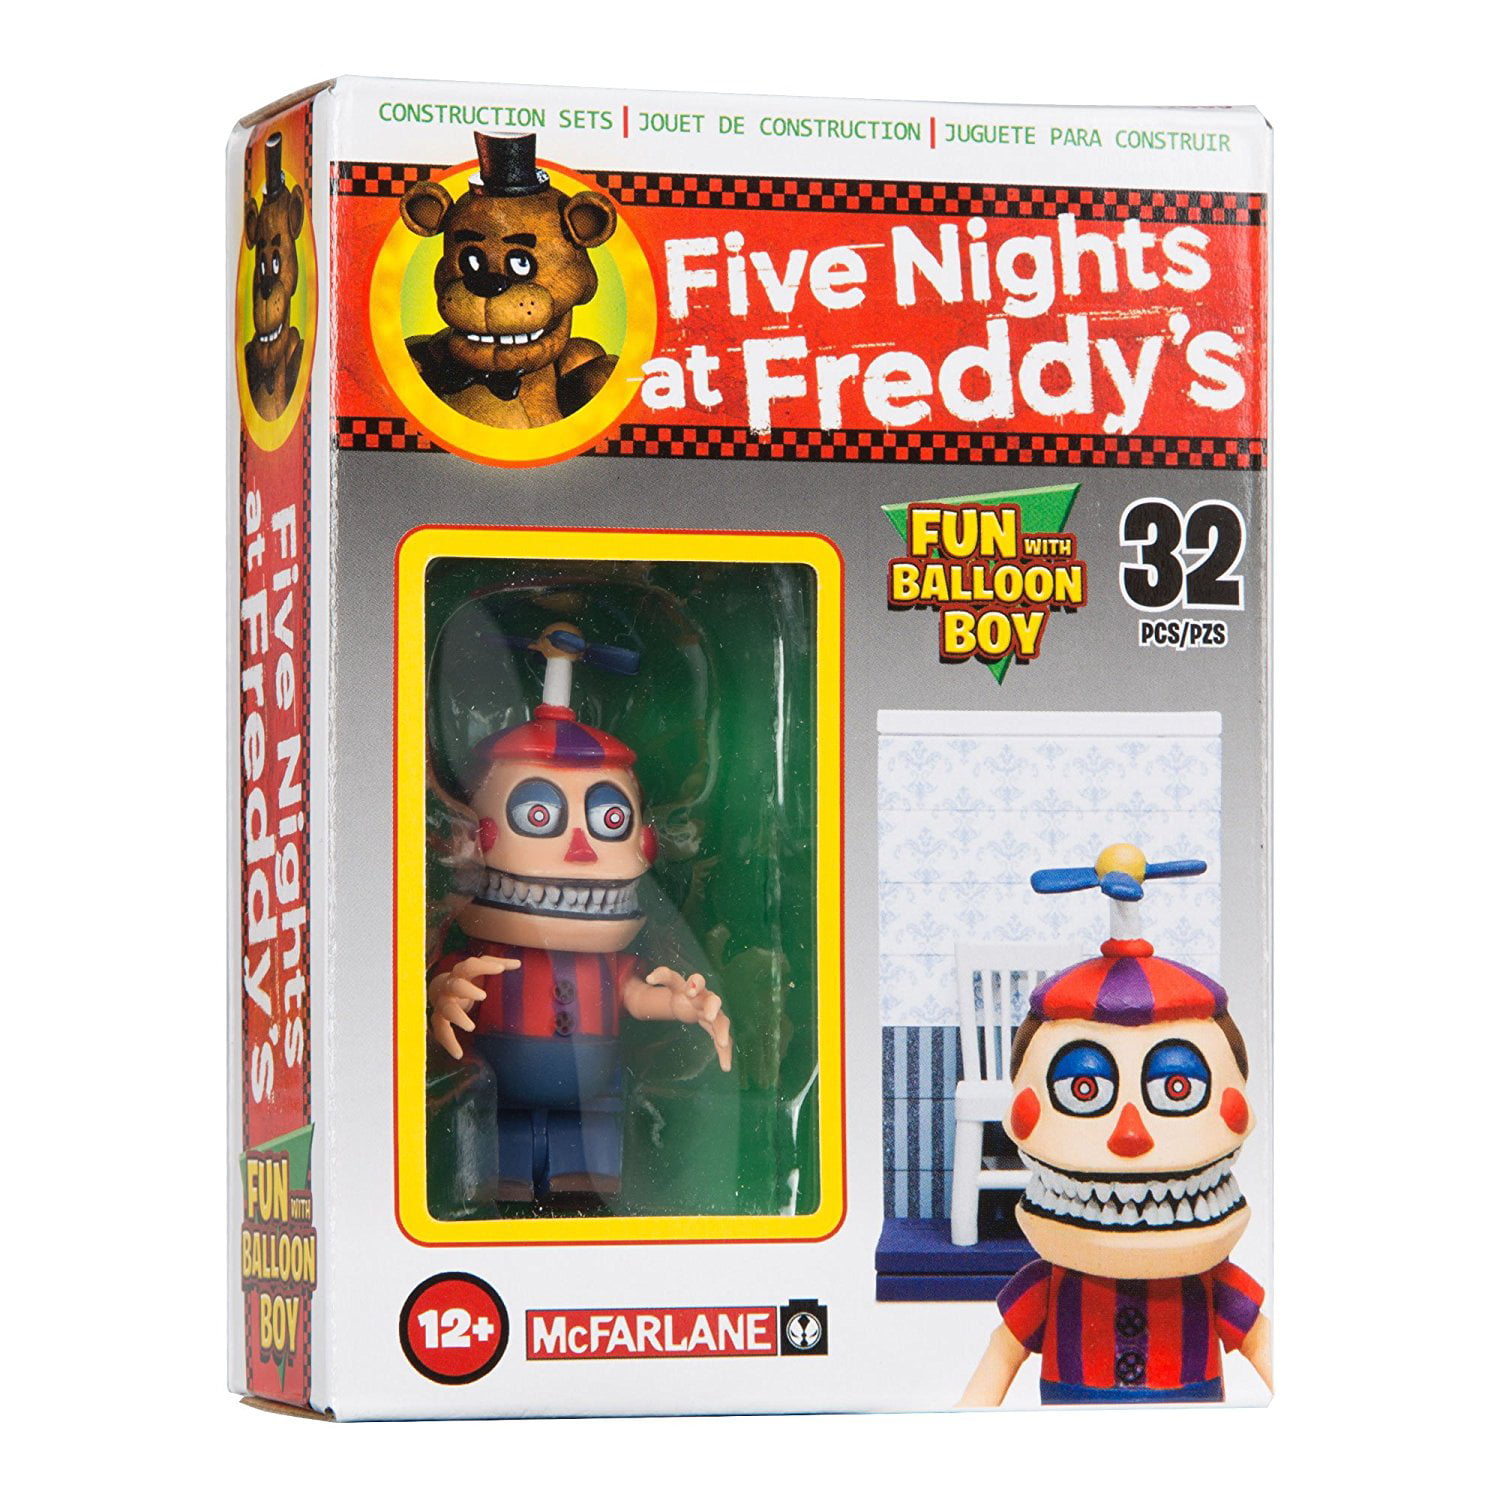 McFarlane FNAF Five Nights at Freddy's PARTS AND SERVICE Micro